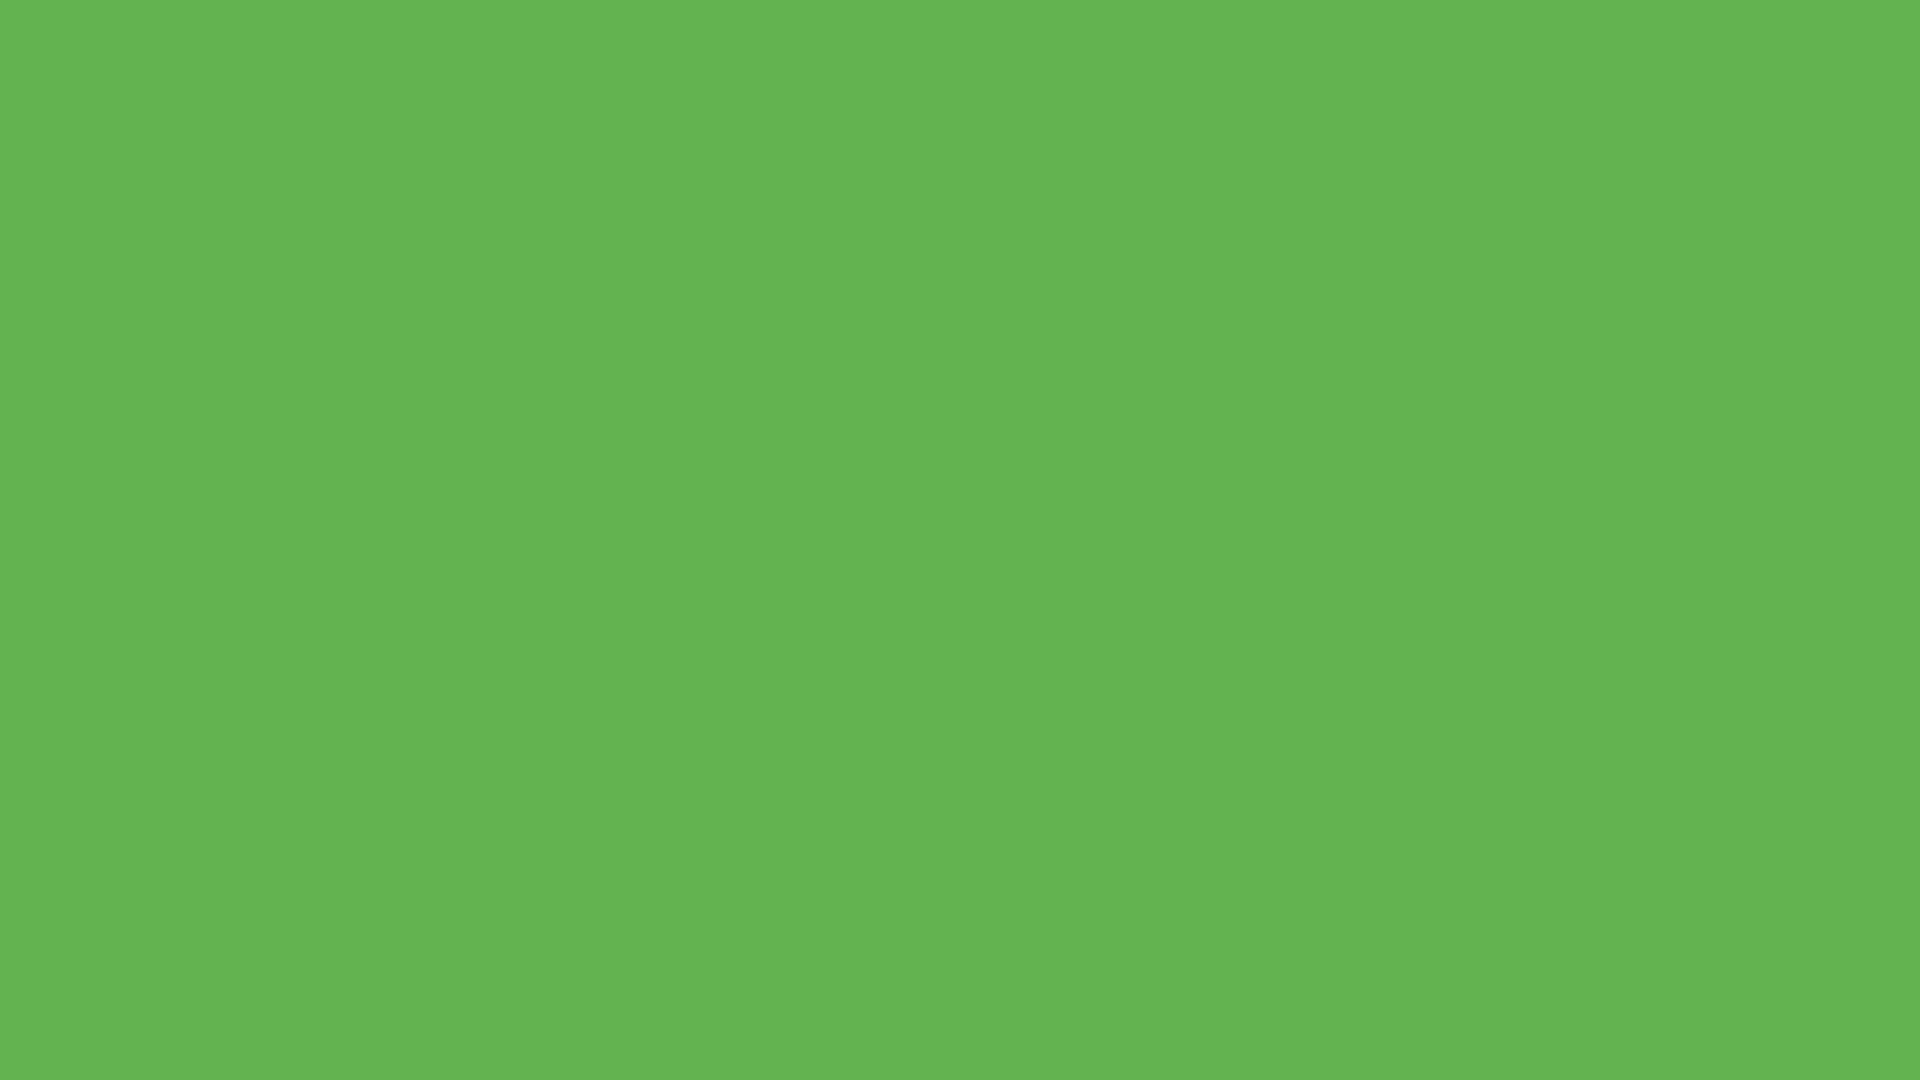 A green rectangle